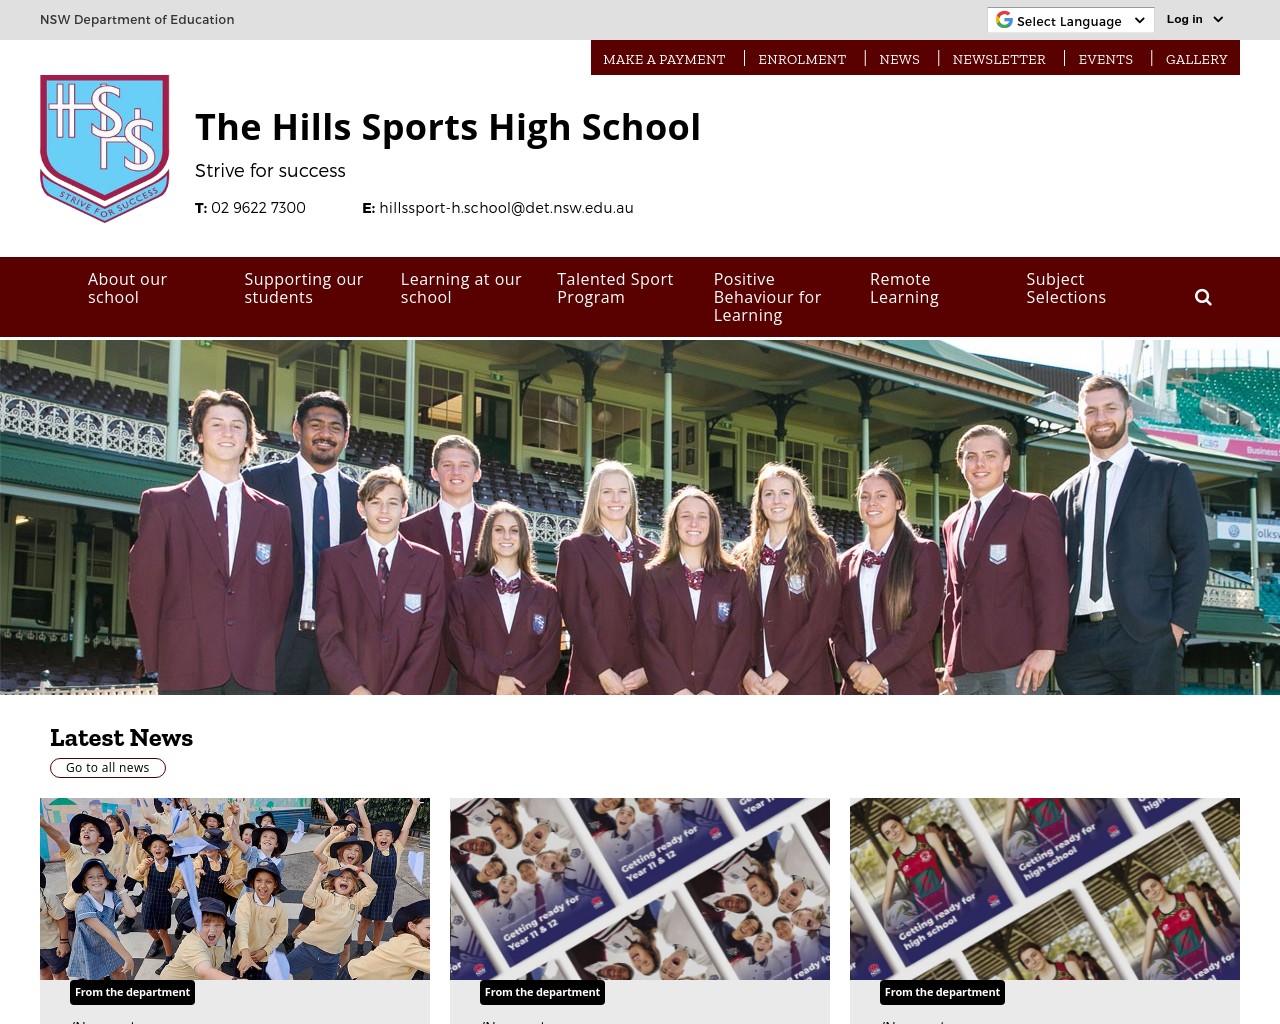 The Hills Sports High School